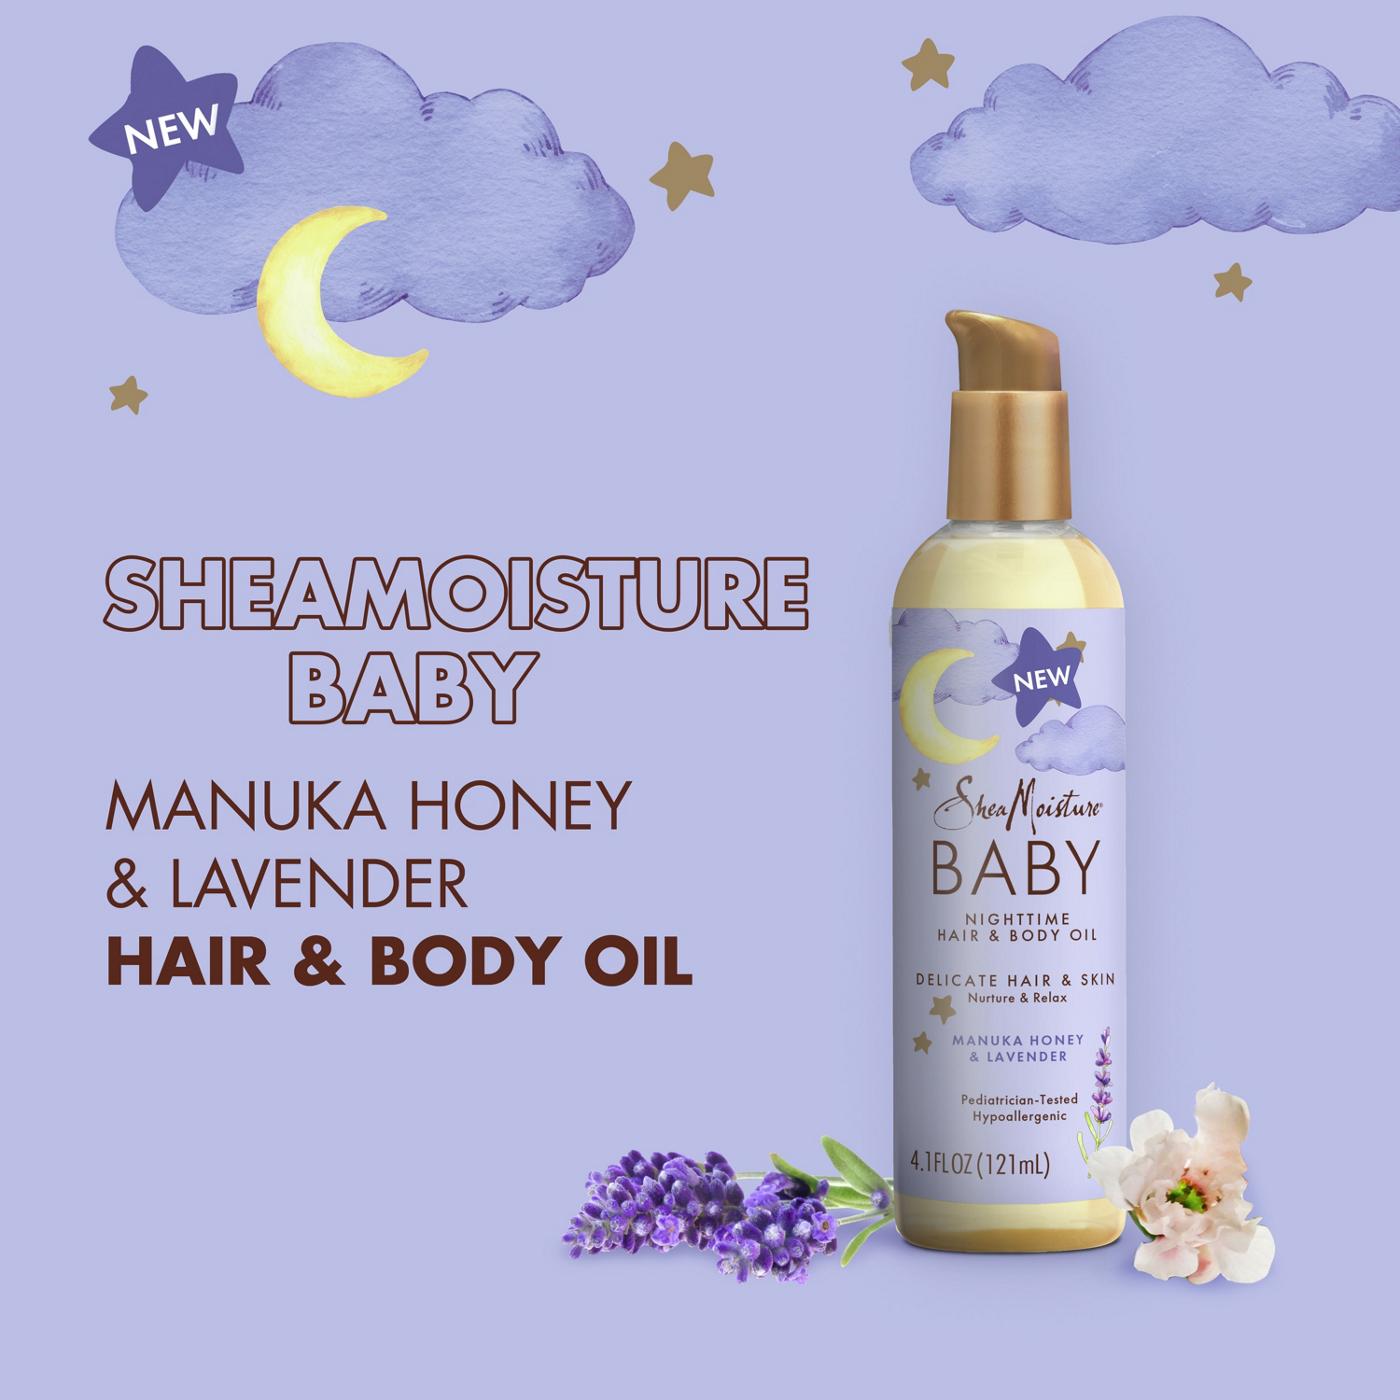 SheaMoisture Baby Nighttime Hair & Body Oil - Manuka Honey & Lavender; image 3 of 5